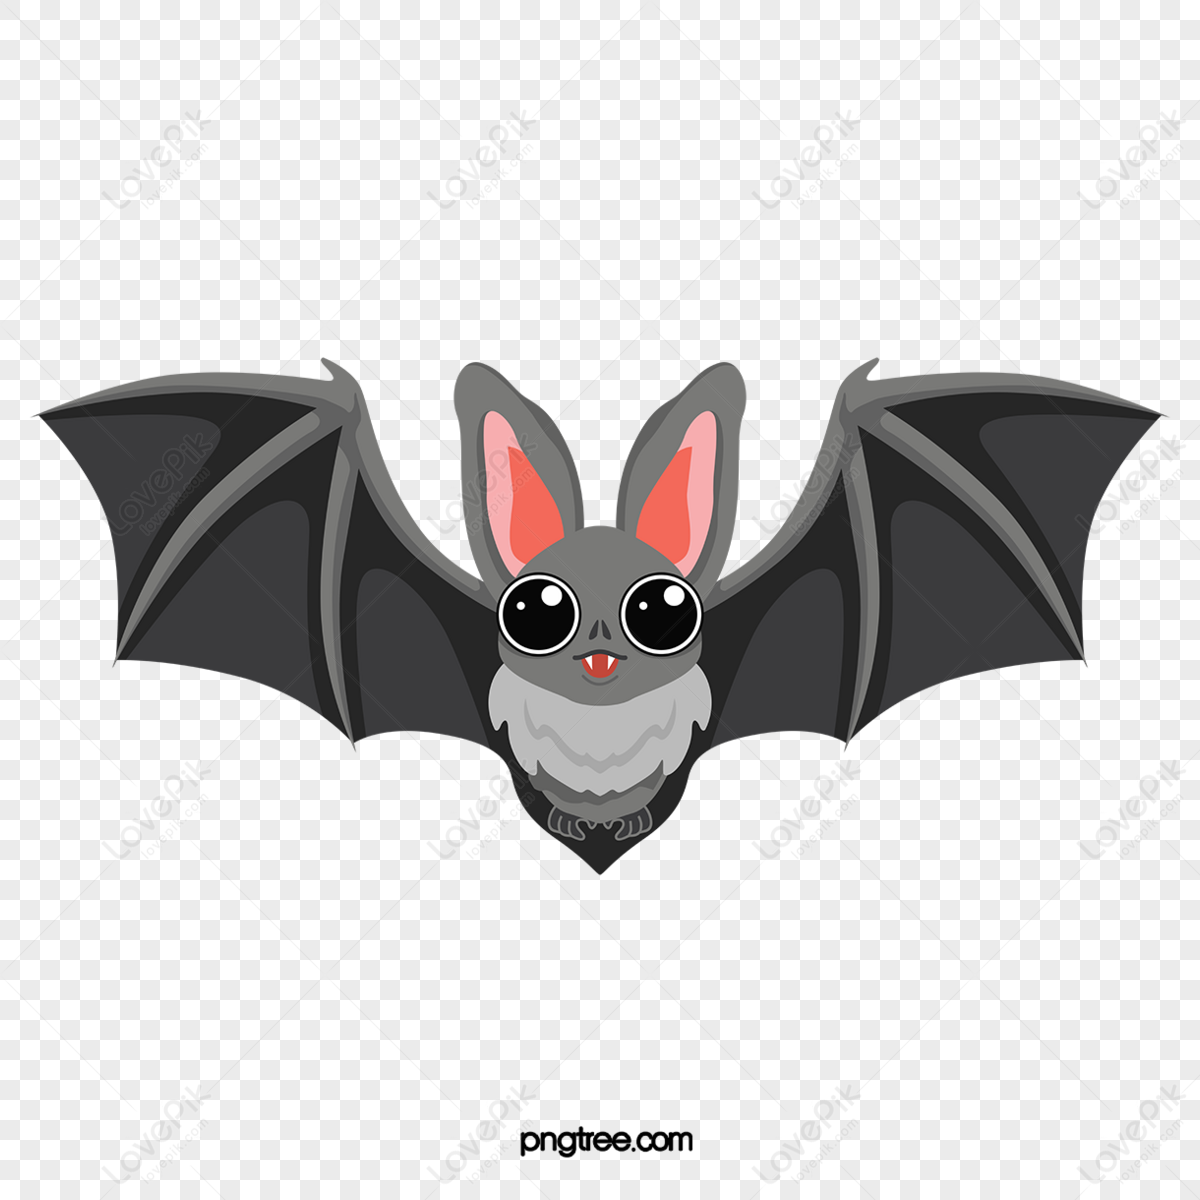 Bat Cartoon Images, HD Pictures For Free Vectors Download - Lovepik.com